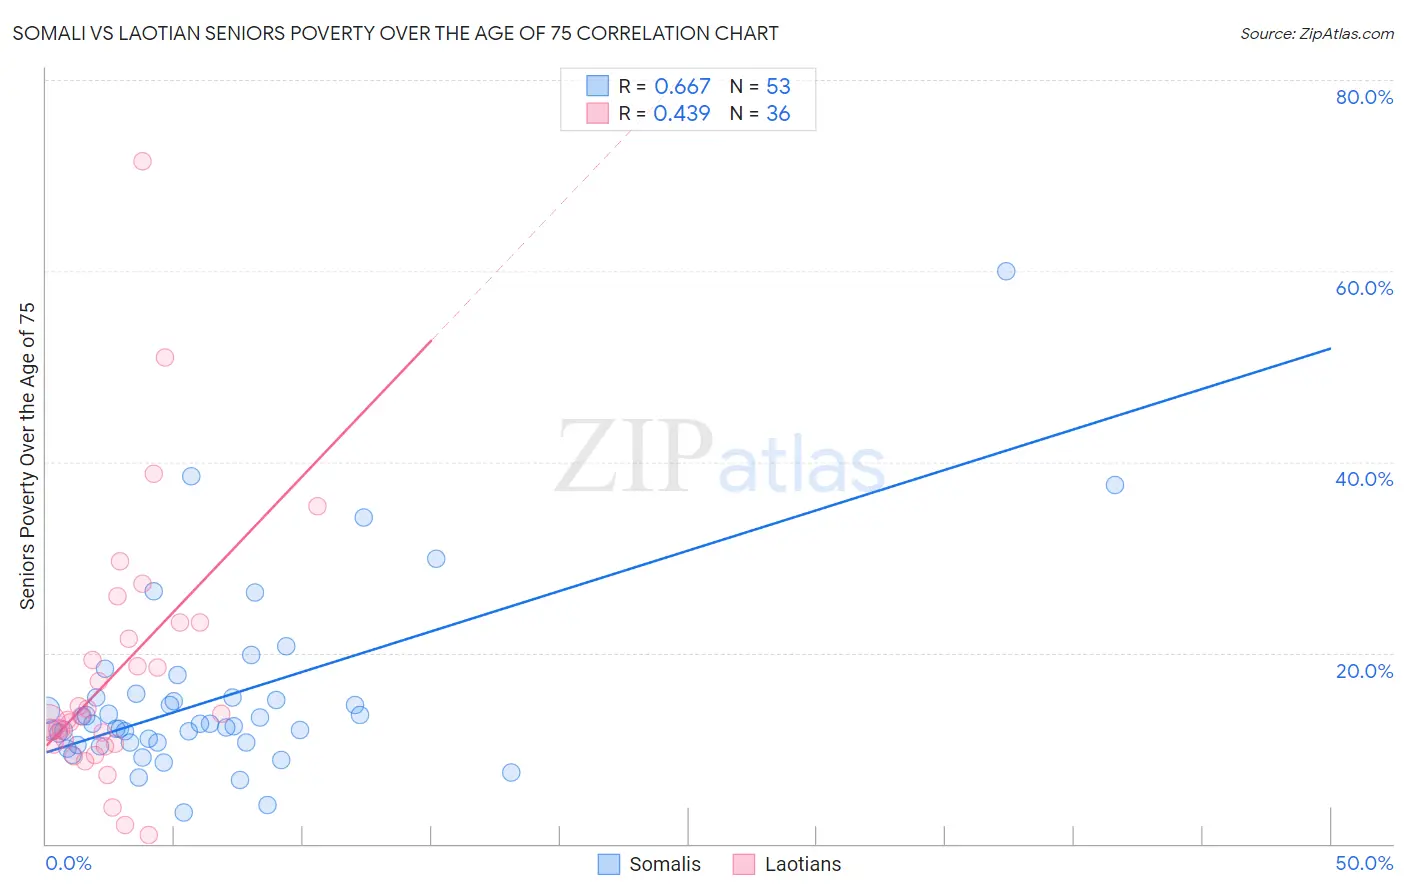 Somali vs Laotian Seniors Poverty Over the Age of 75